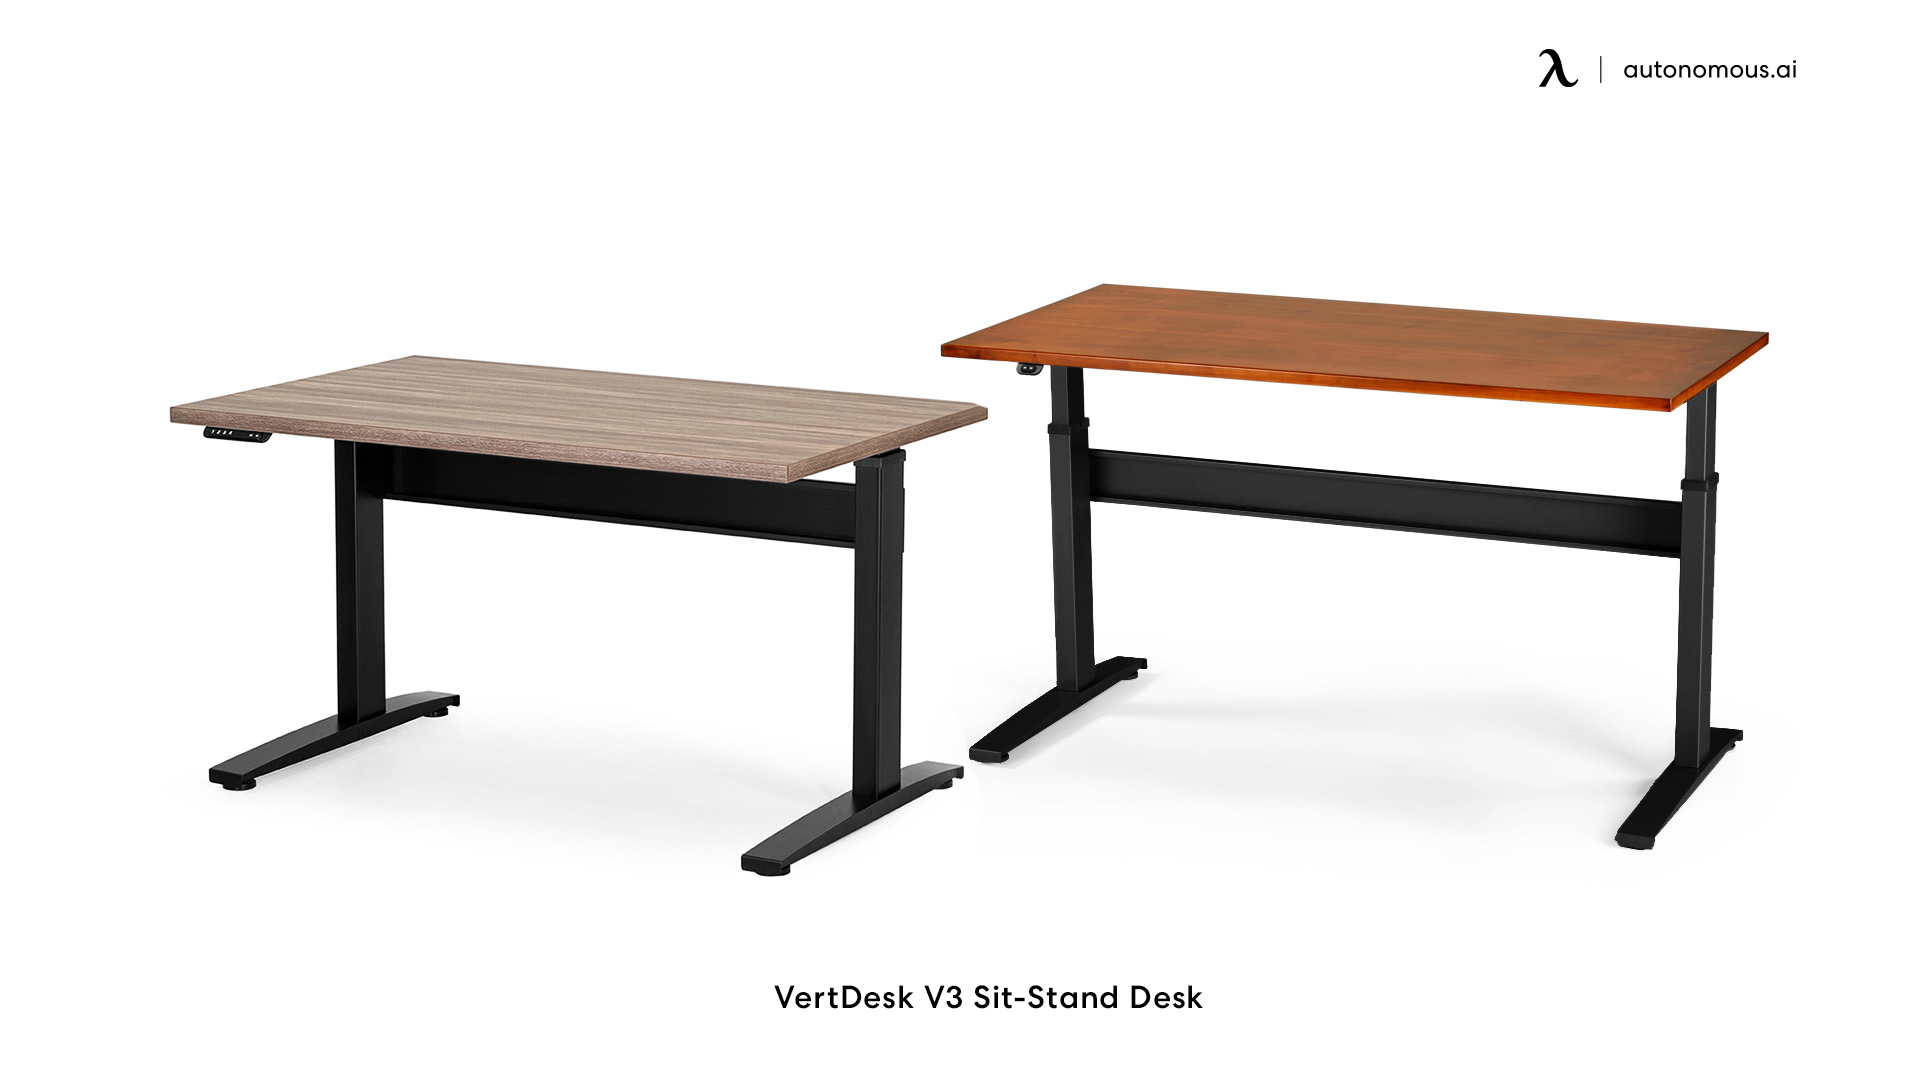 V3 Sit Stand Desk from VertDesk home office desk